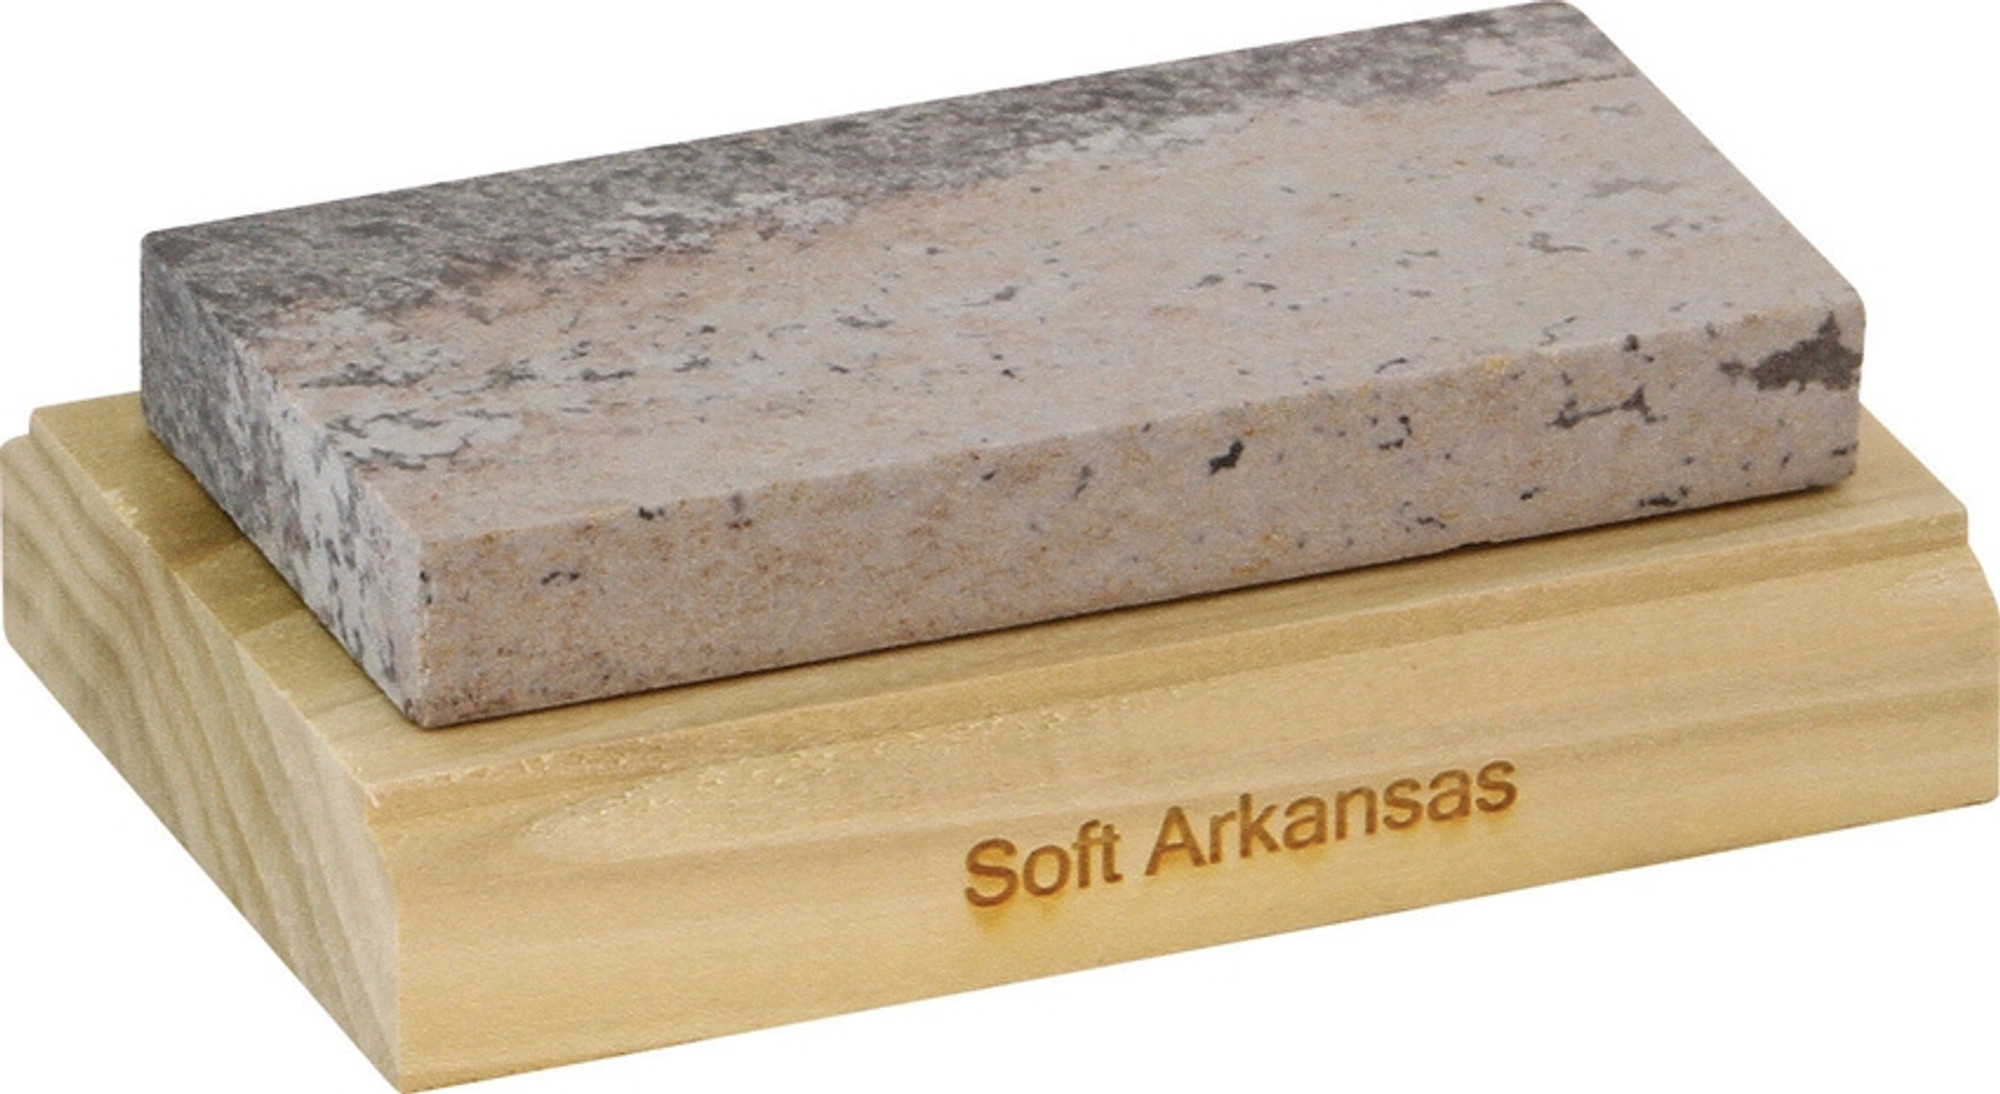 Soft Arkansas Mounted Stone